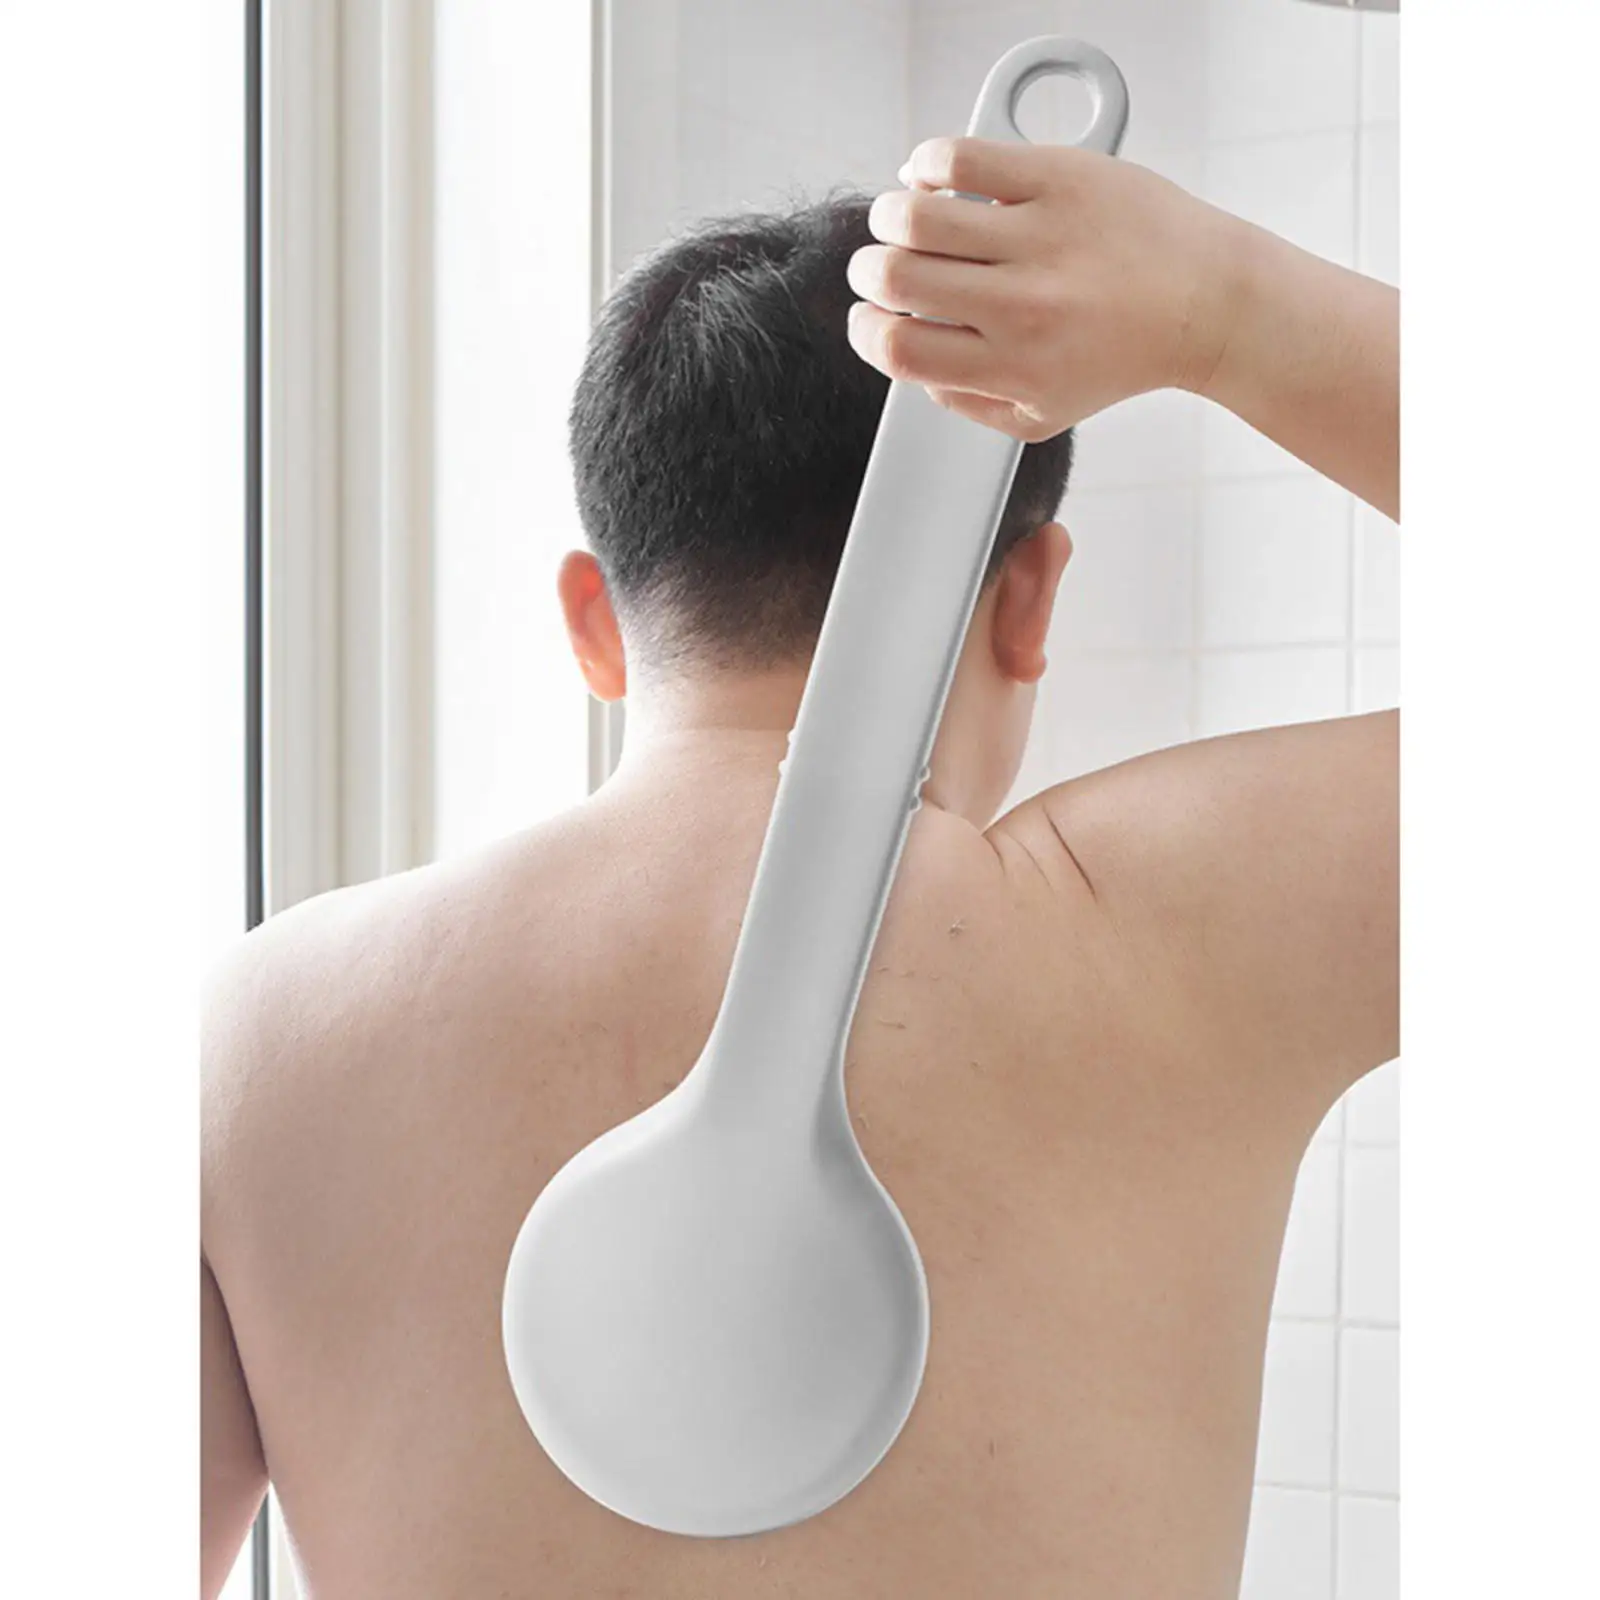 Lotion Applicator with Long Reach Handle Sponge Brush Self Application for Back Legs Shower Bath Sunscreen Men Women